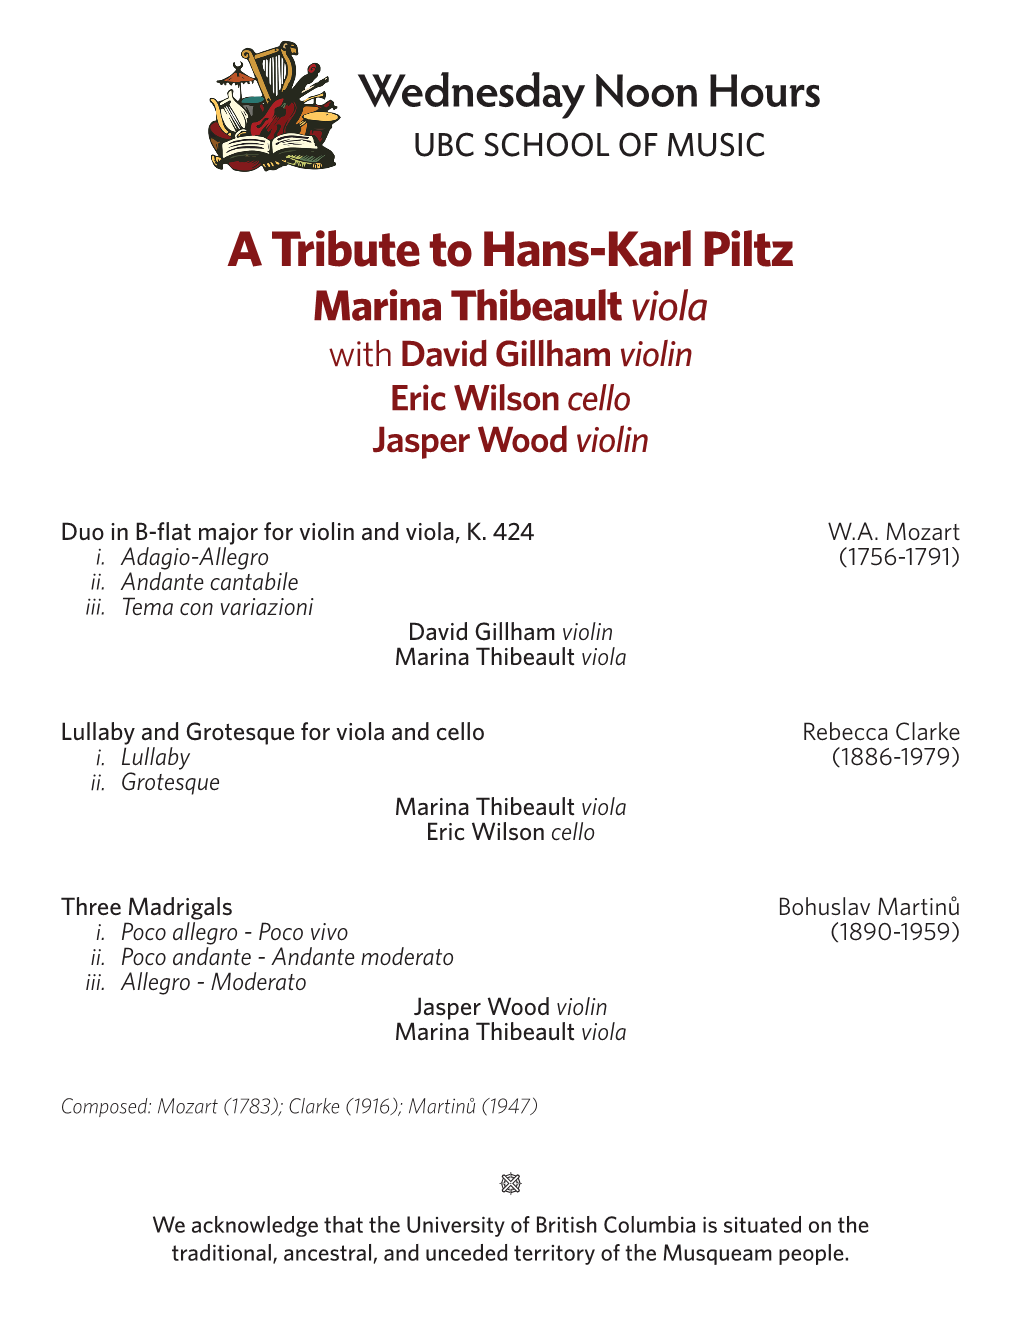 A Tribute to Hans-Karl Piltz Marina Thibeault Viola with David Gillham Violin Eric Wilson Cello Jasper Wood Violin